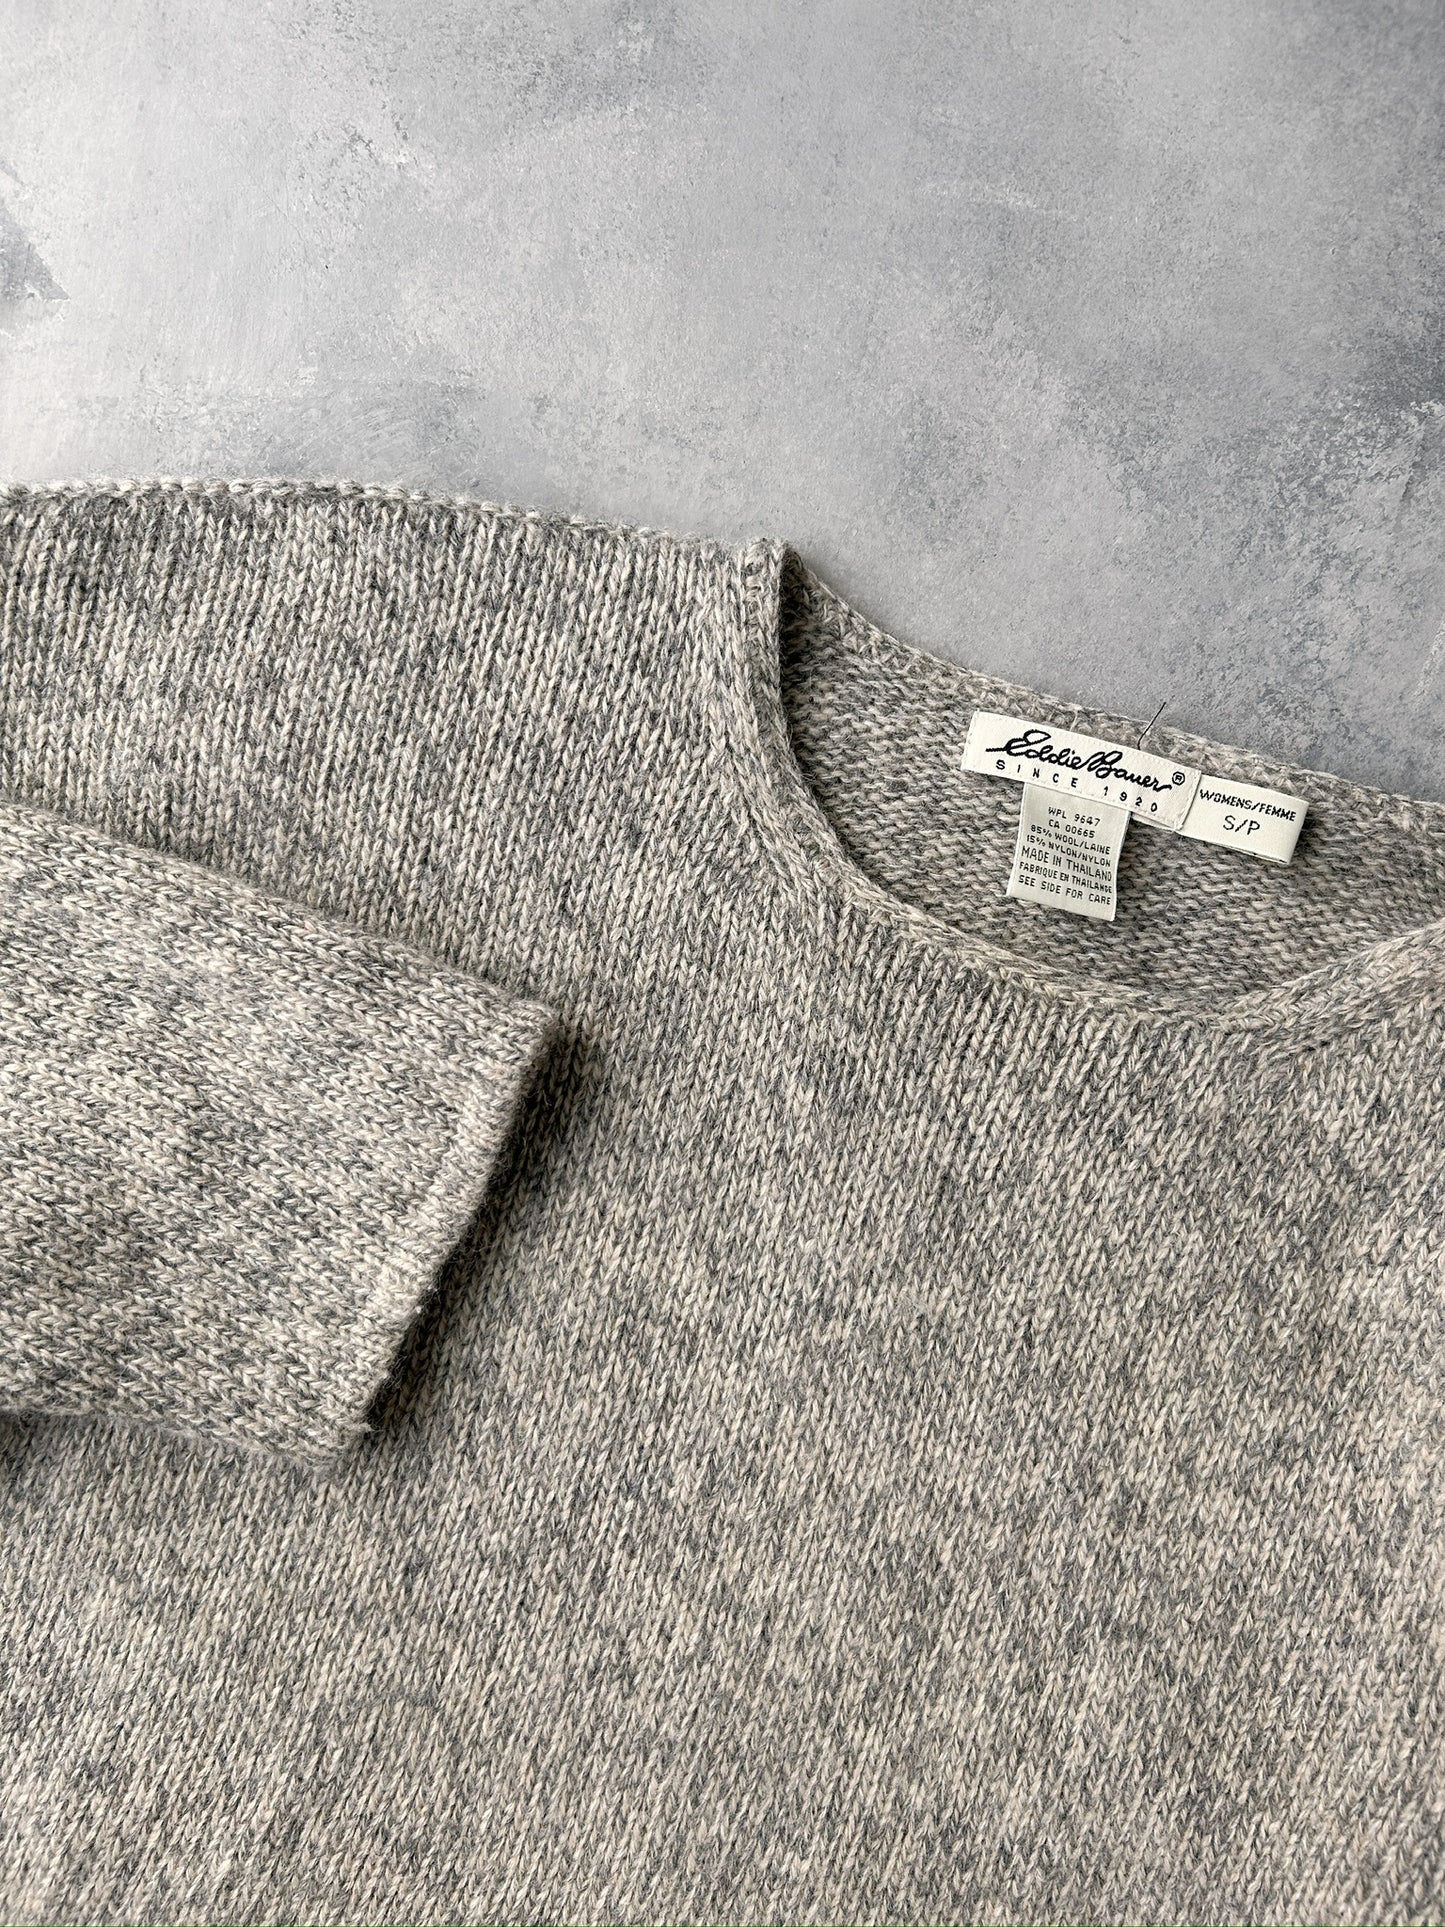 Gray Sweater 90's - Small